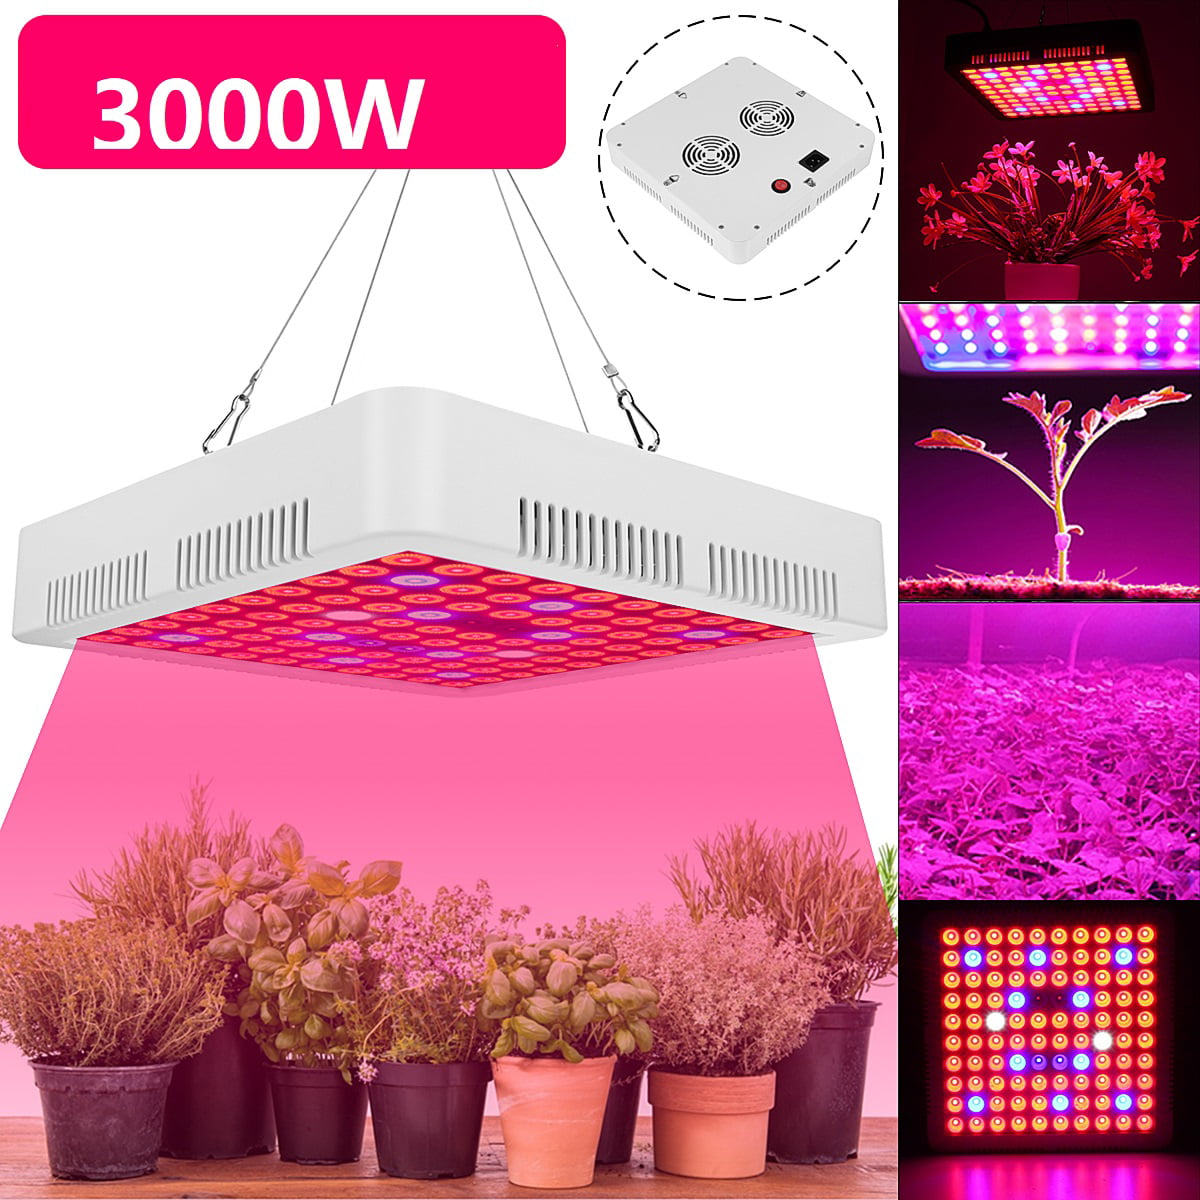 60W-800W LED Grow Light Sunlike Full Spectrum Hydroponics Veg Flower Plant Lamp 